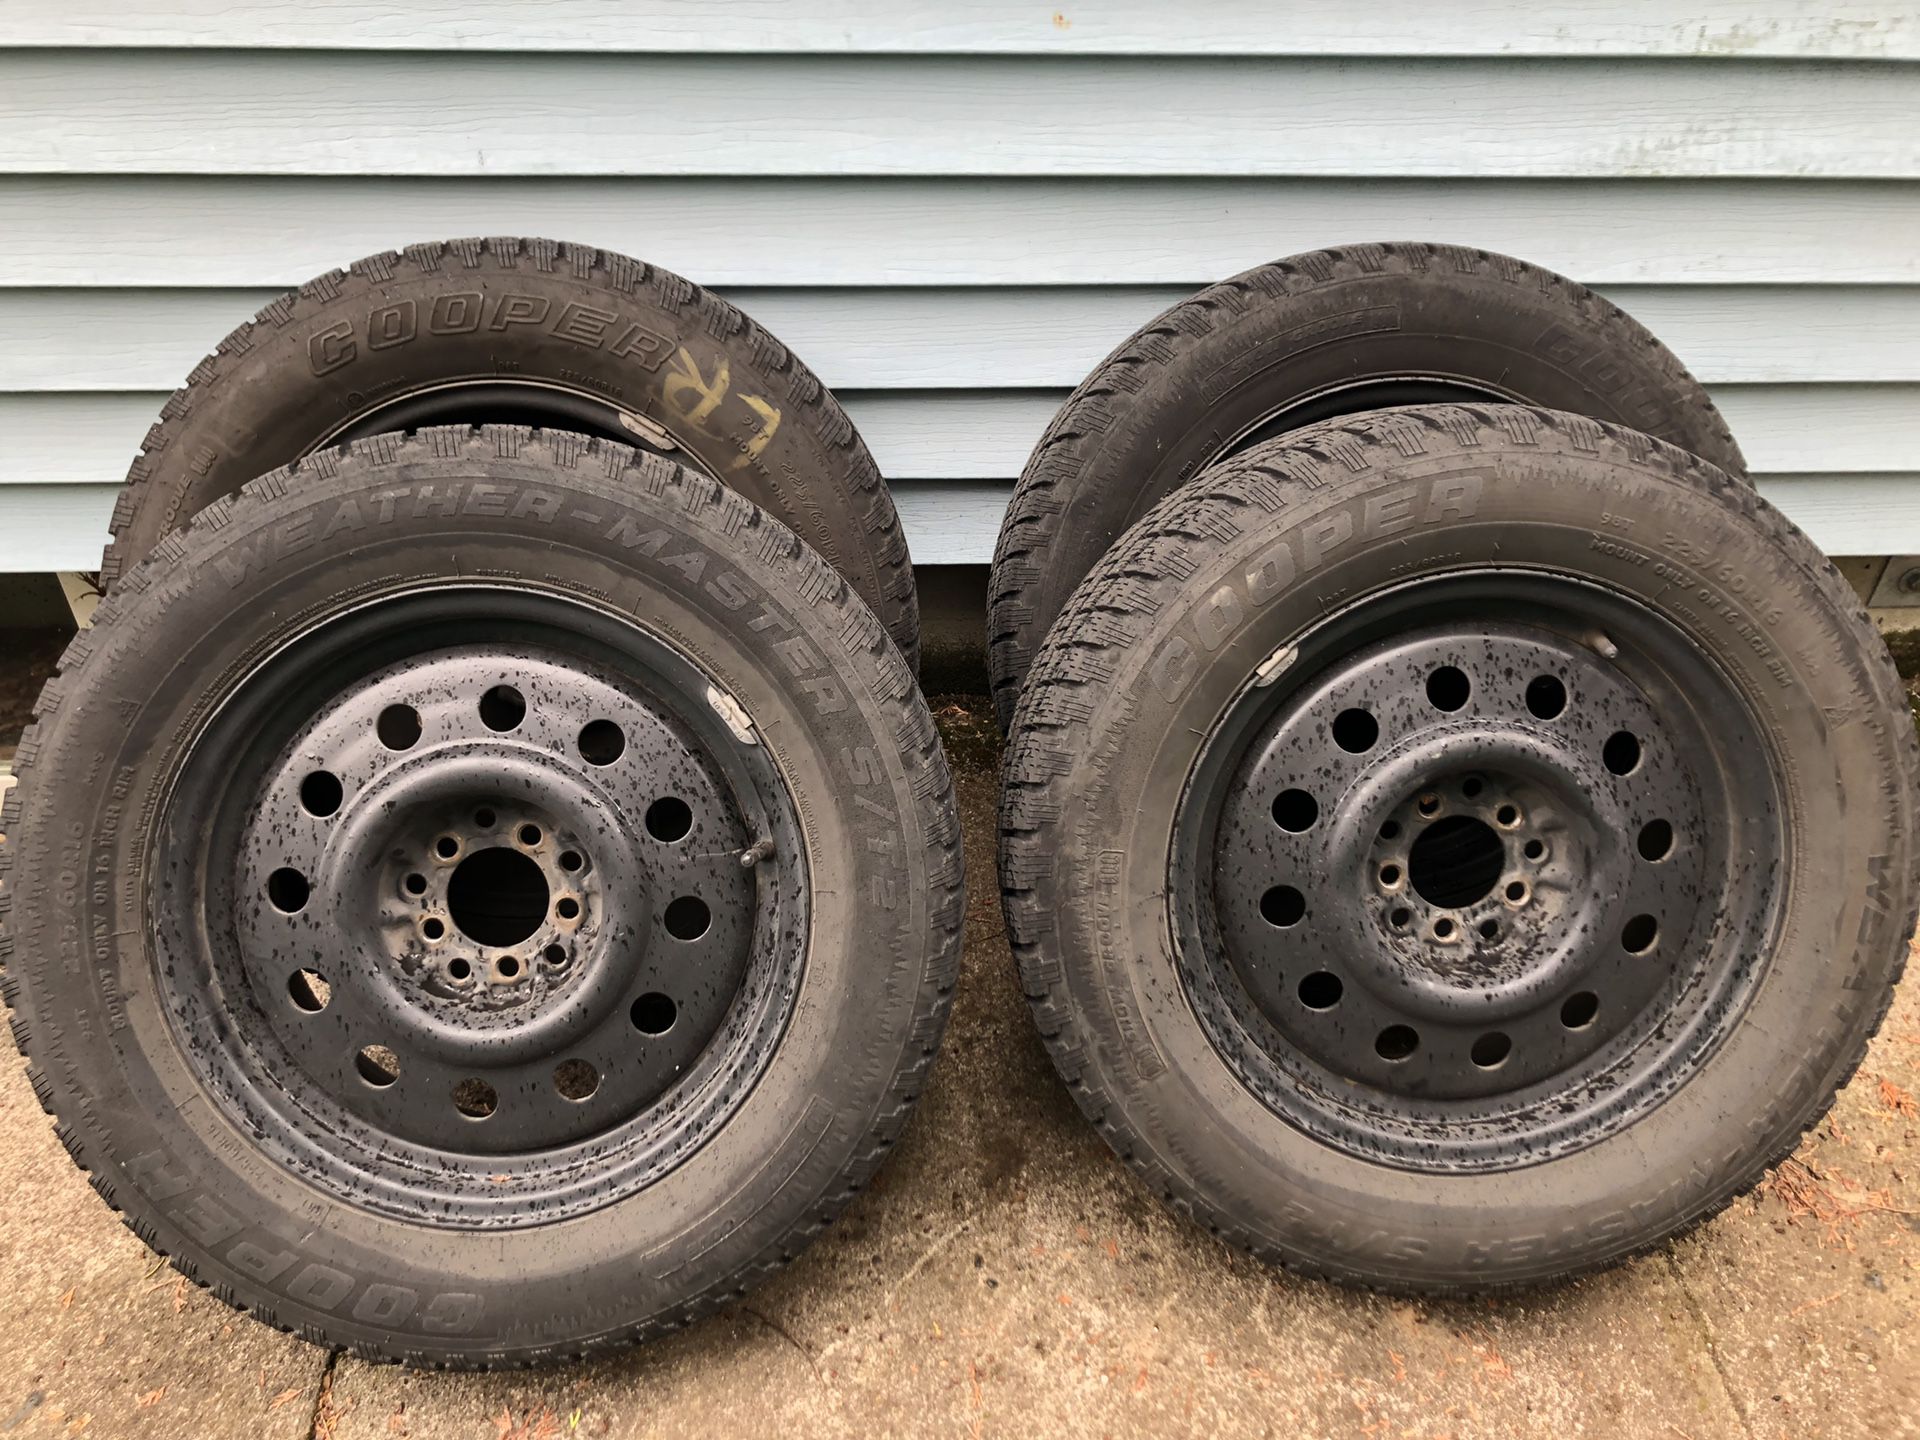 Subaru Snow tires x 4